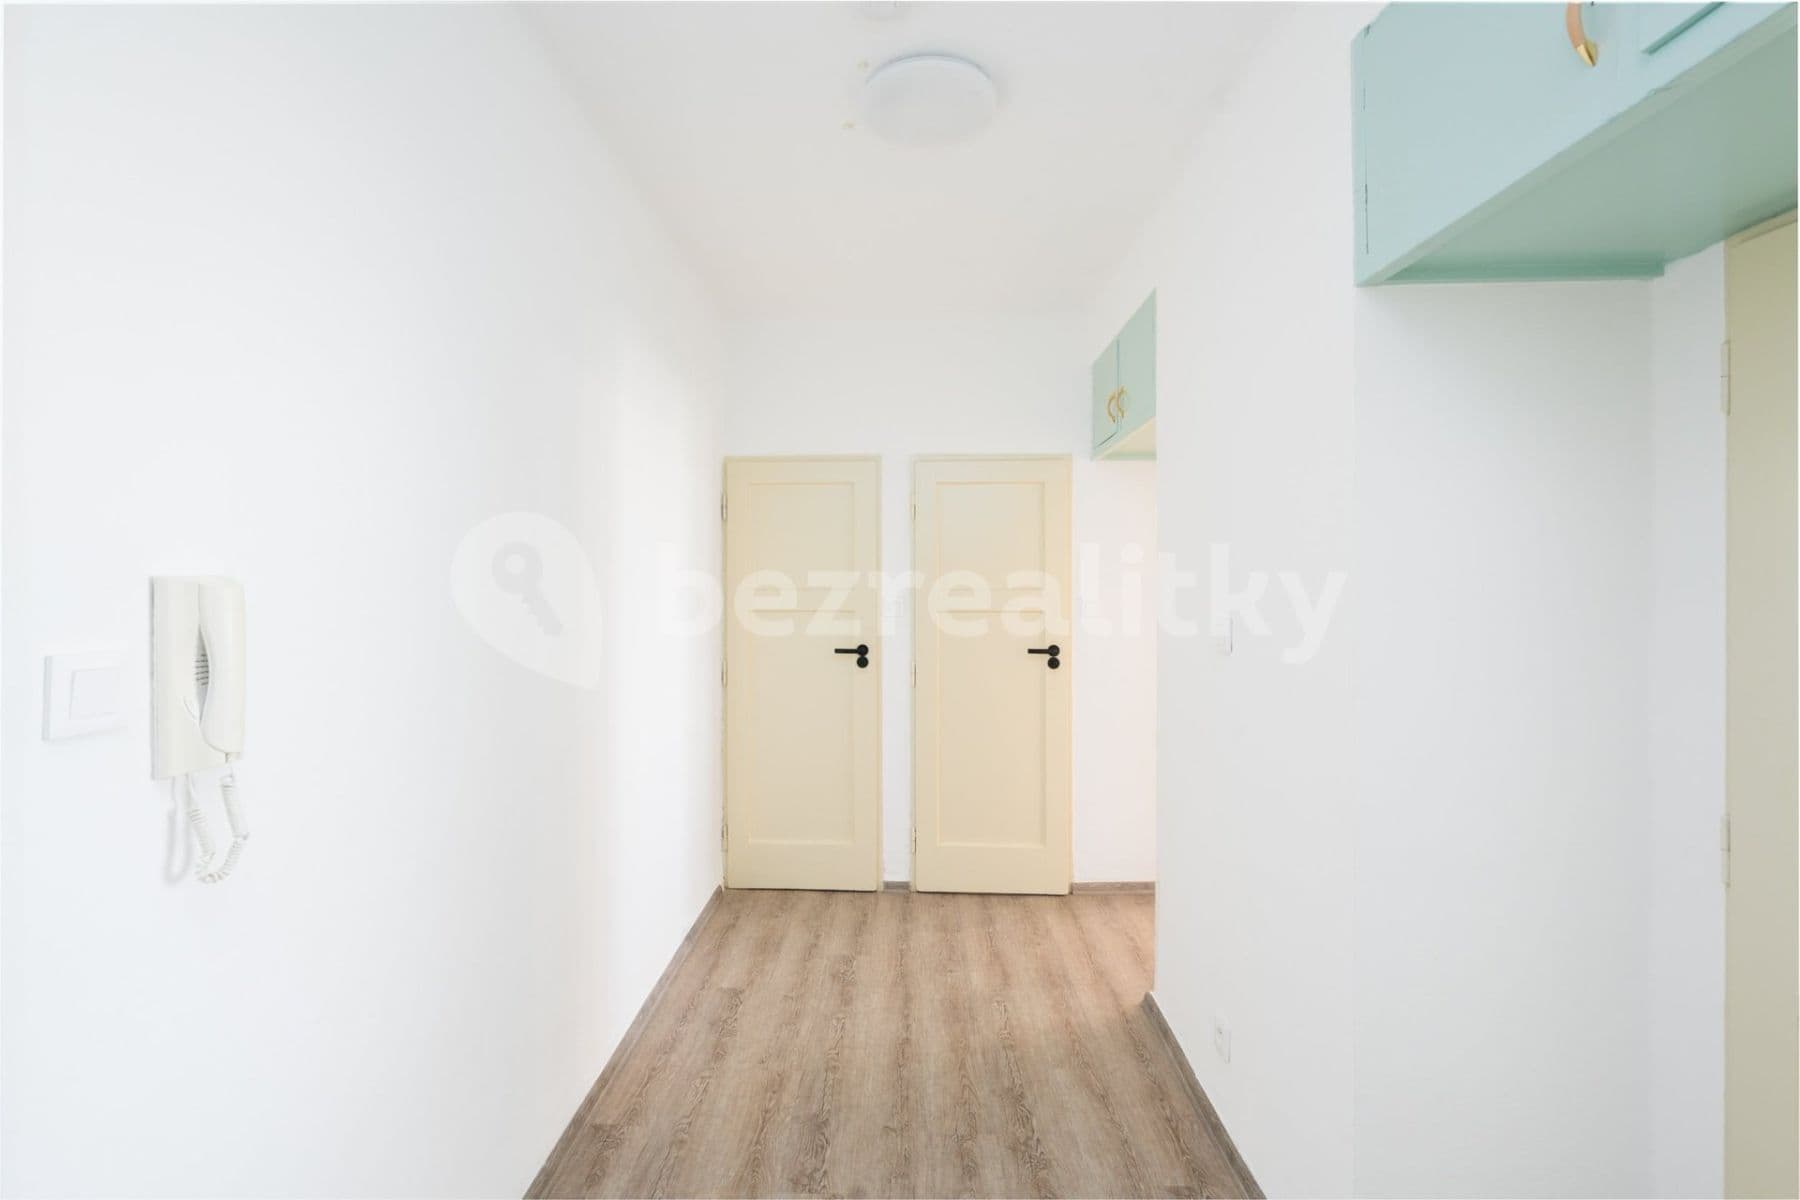 2 bedroom flat to rent, 61 m², Loudova, Prague, Prague